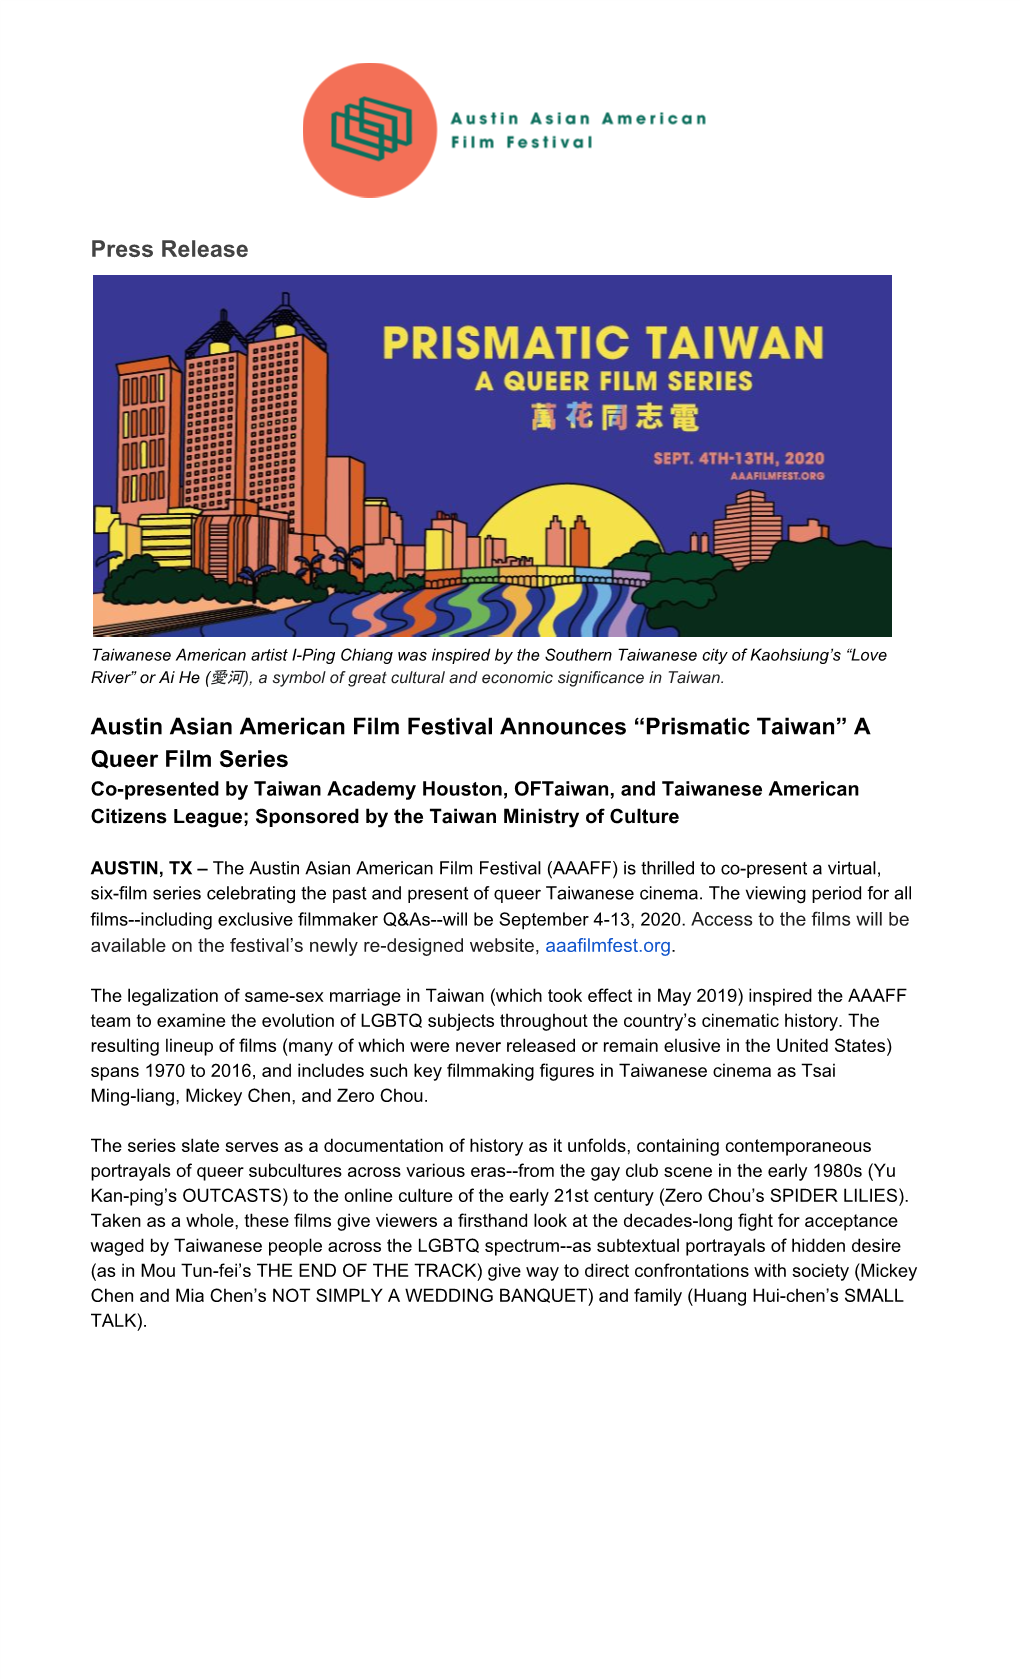 Press Release Austin Asian American Film Festival Announces “Prismatic Taiwan” a Queer Film Series